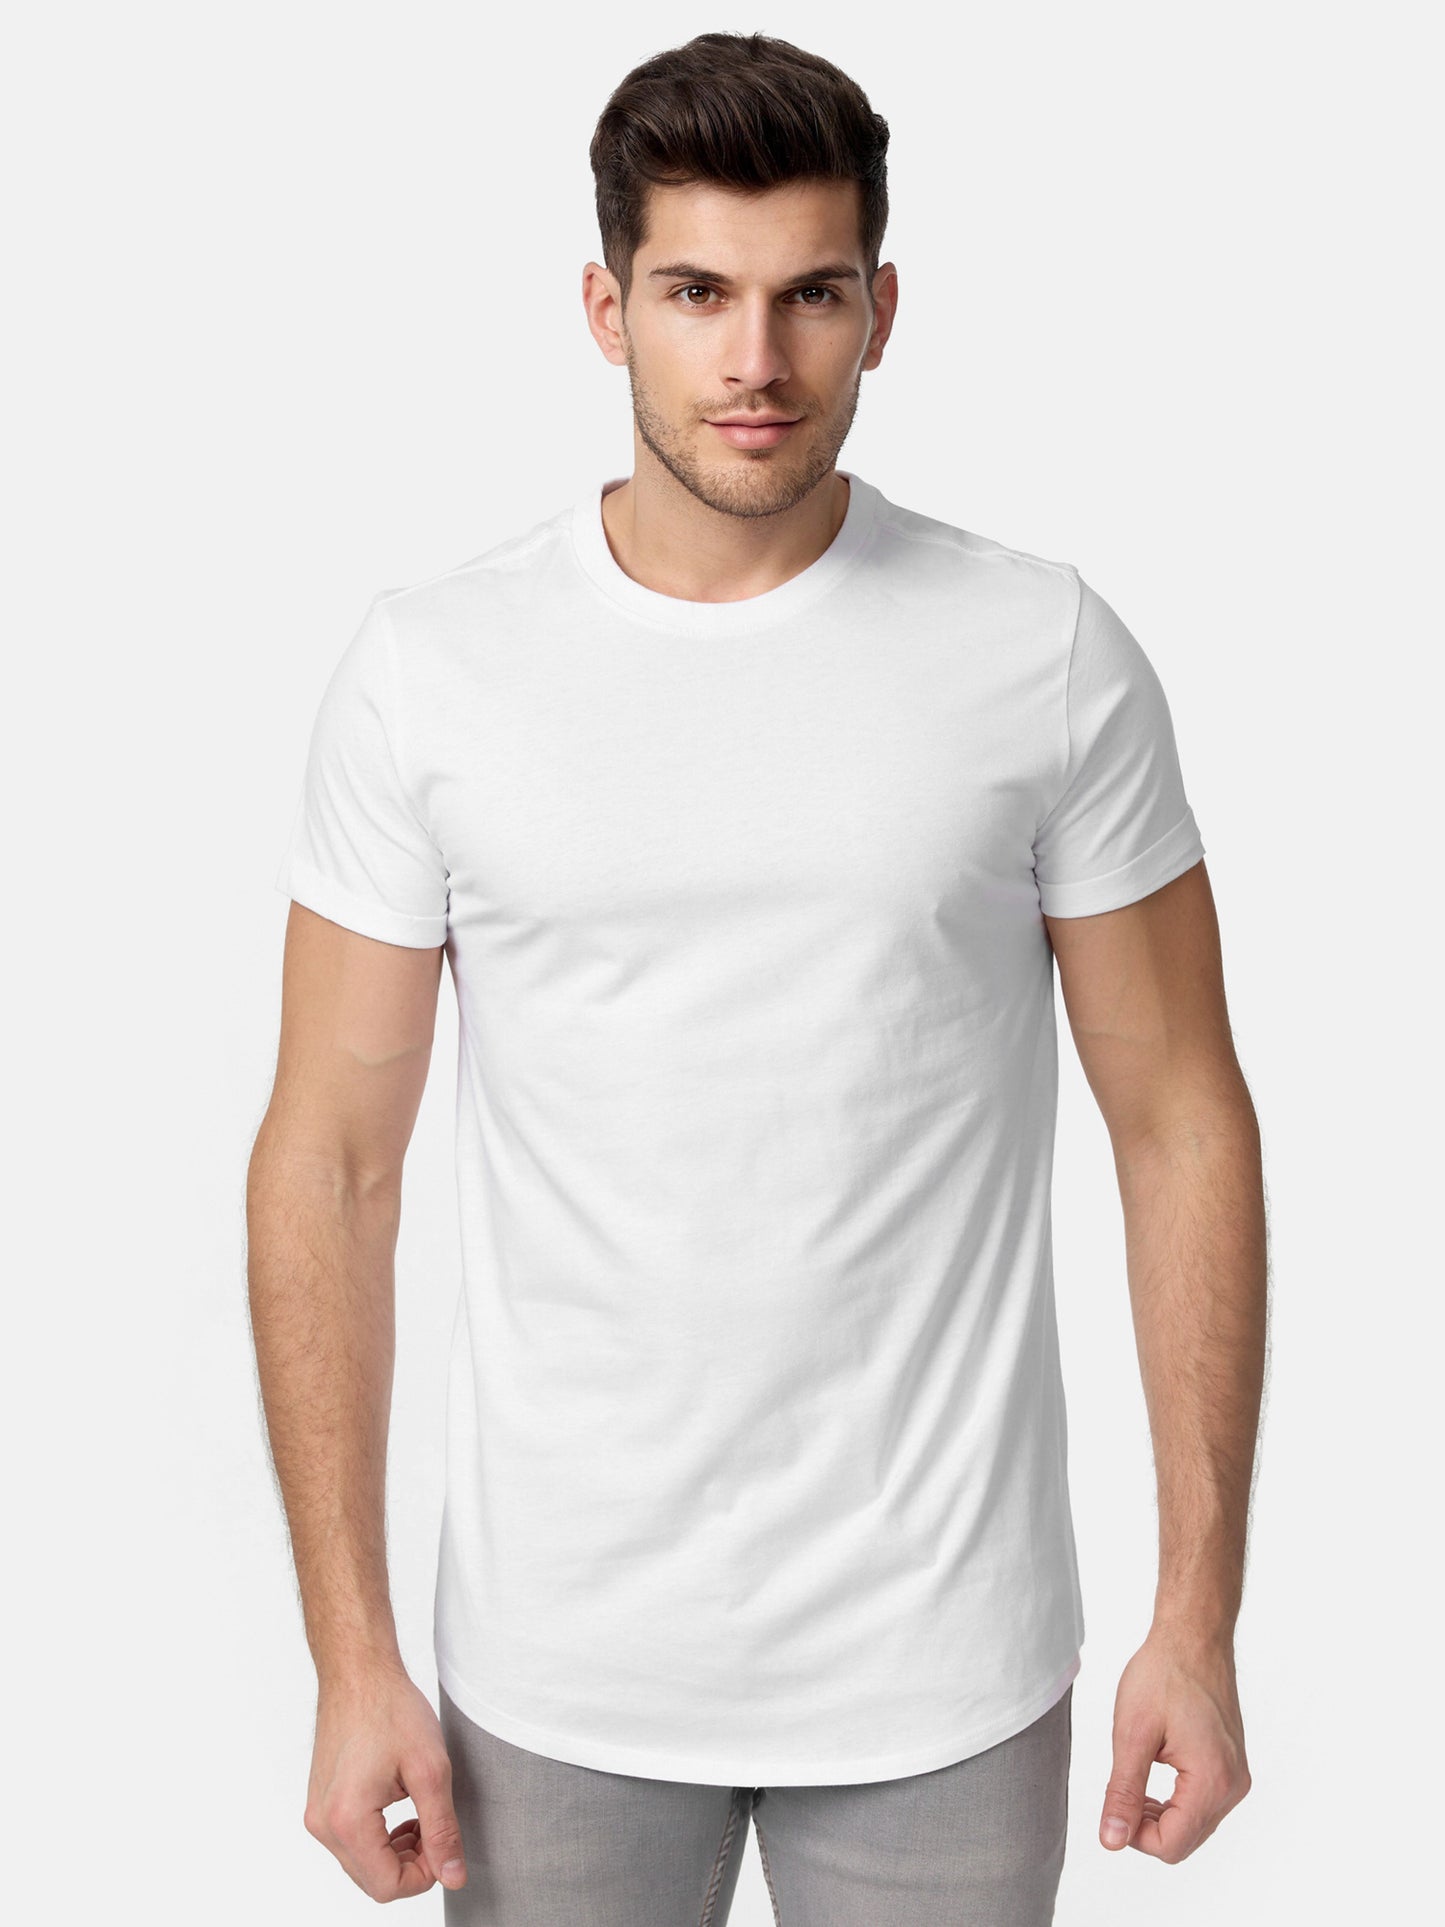 Tazzio Herren T-Shirt Rundhals E105